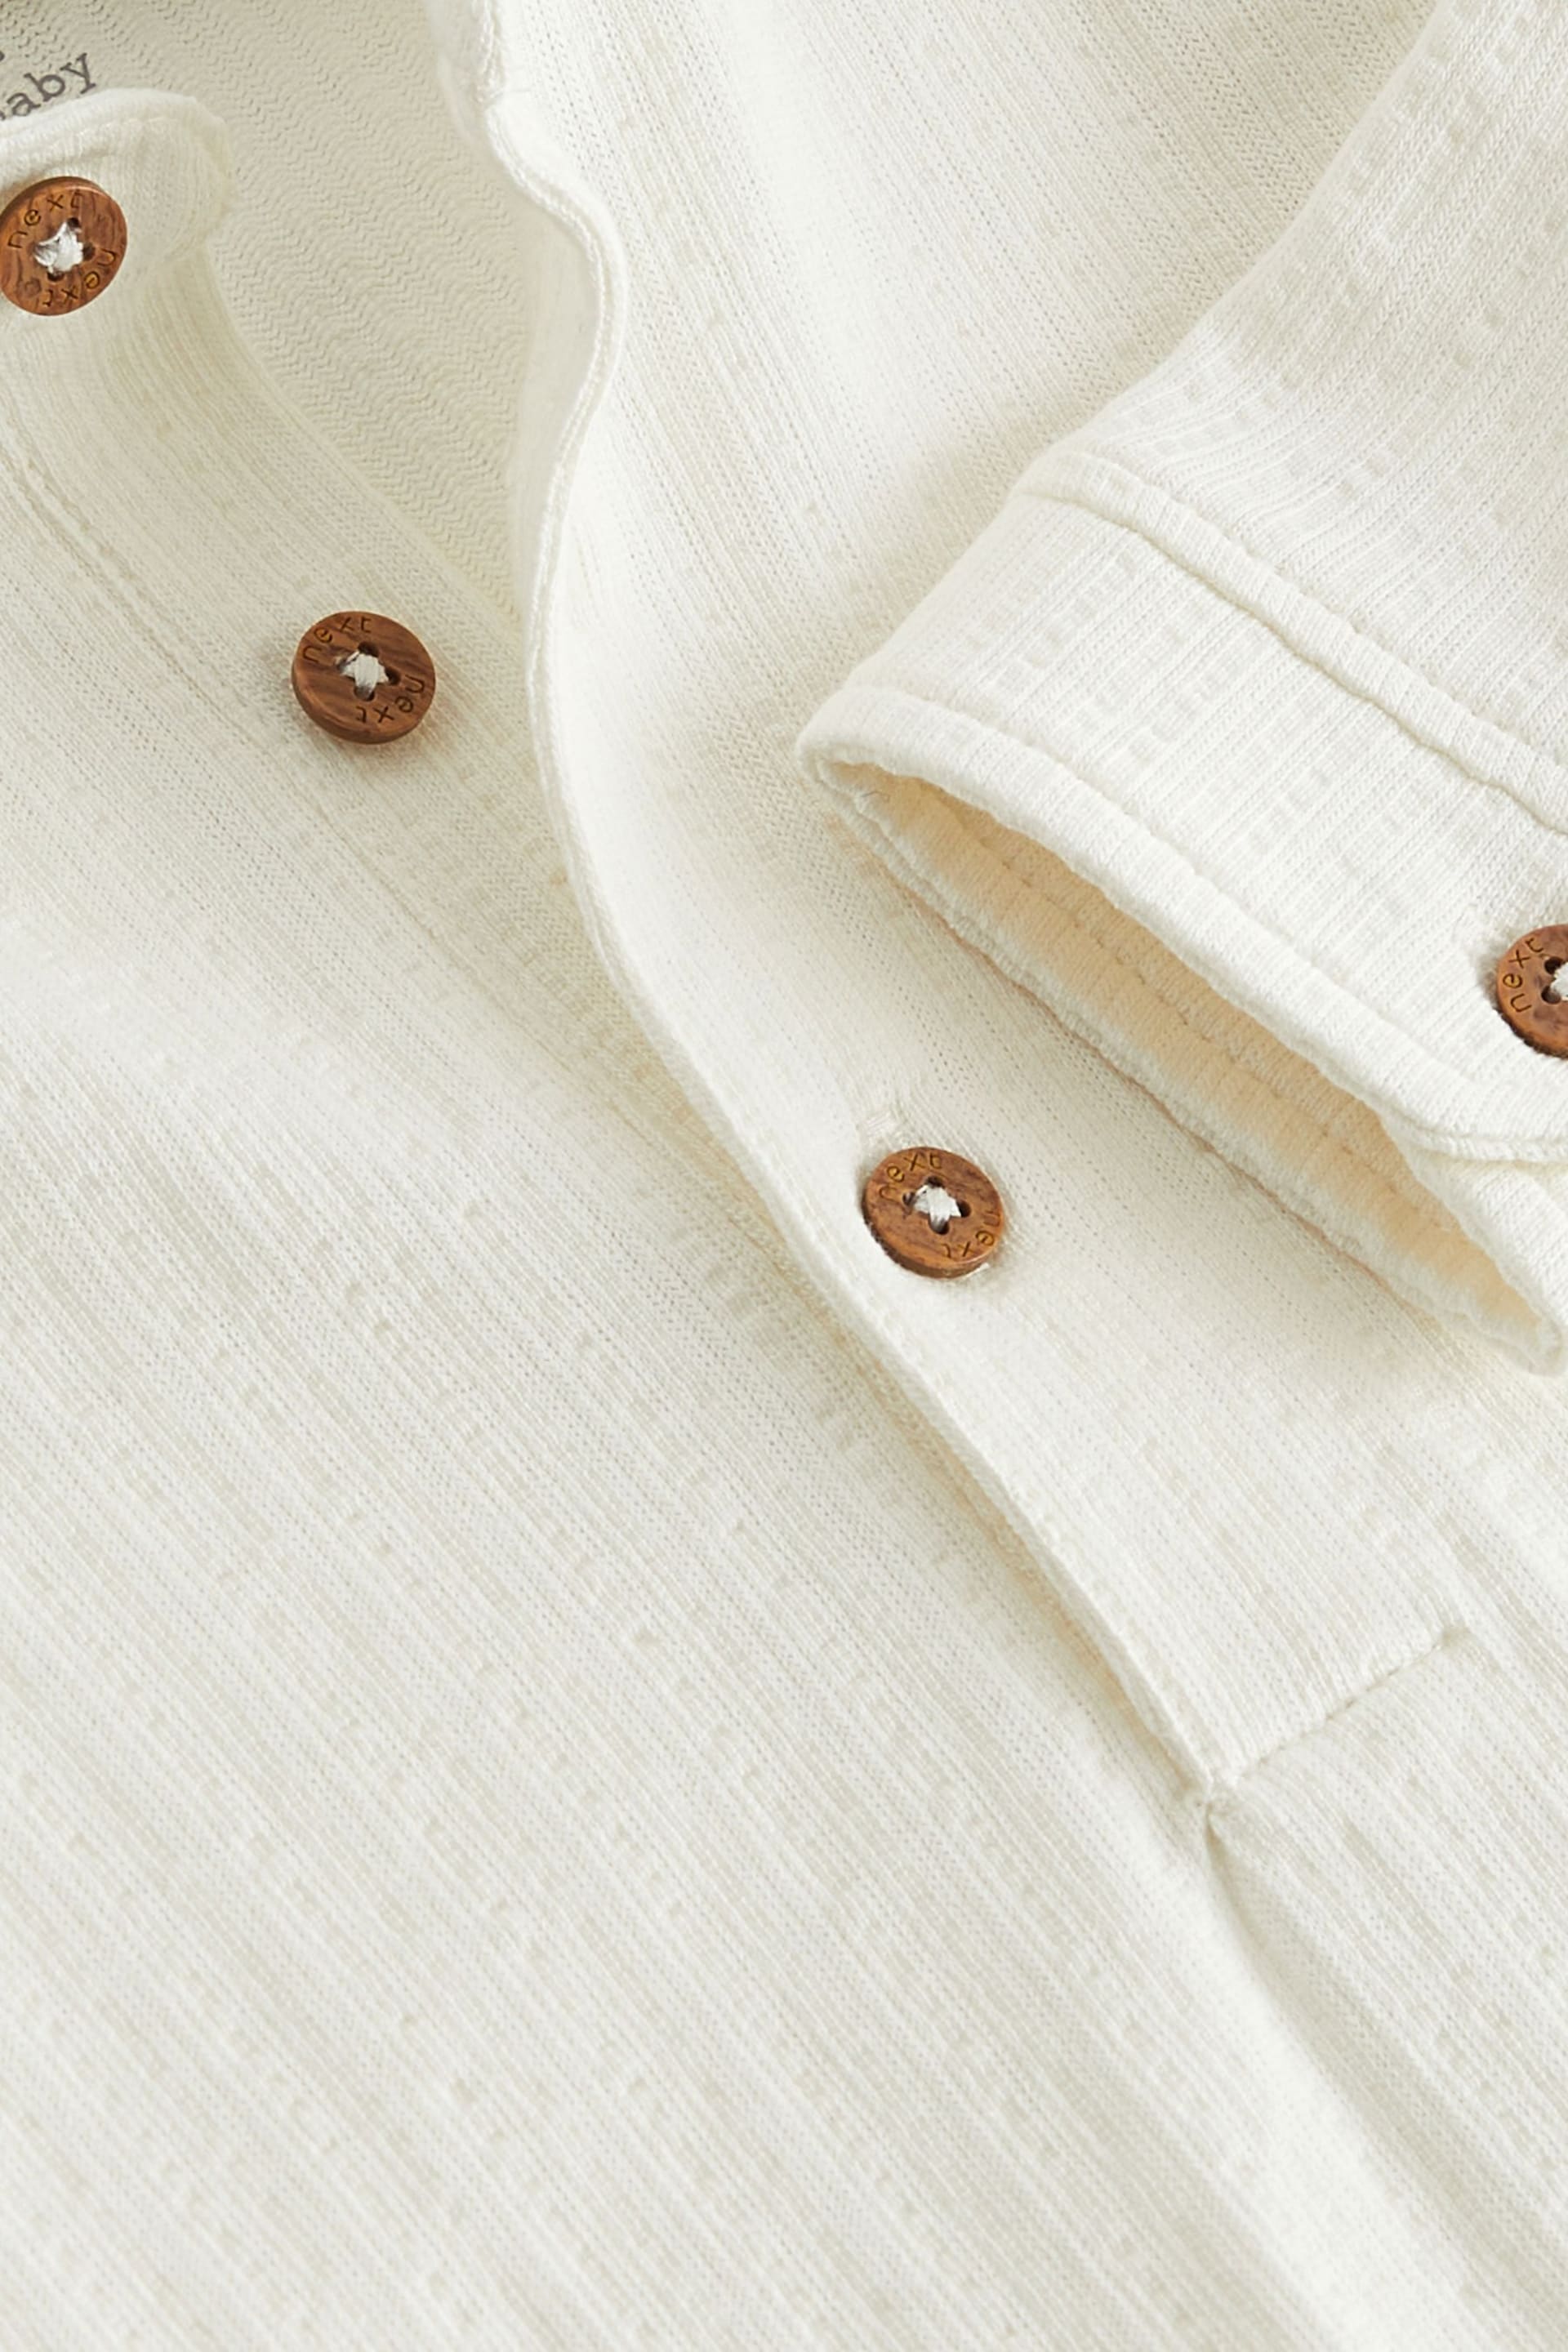 White Textured Shirt Baby Bodysuit - Image 3 of 3